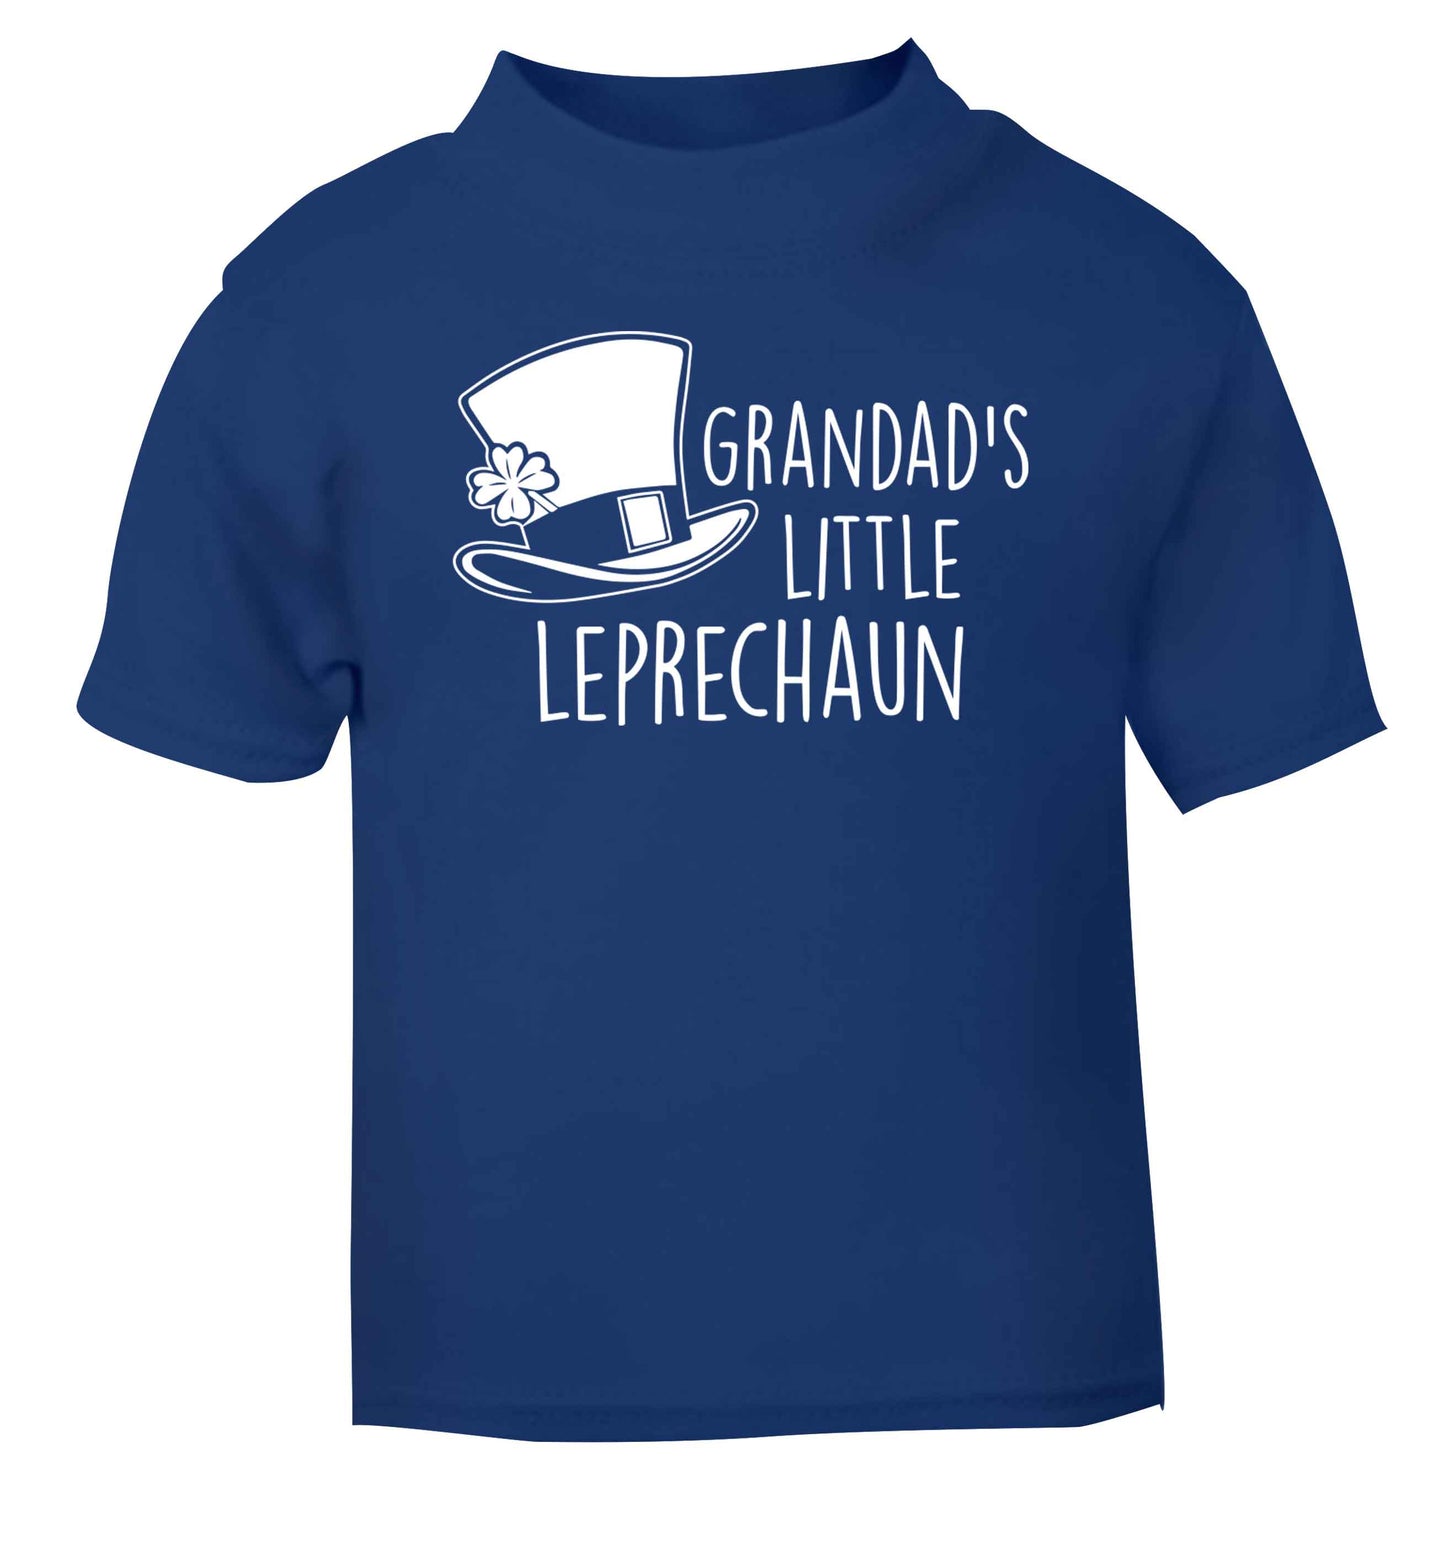 Grandad's little leprechaun blue baby toddler Tshirt 2 Years